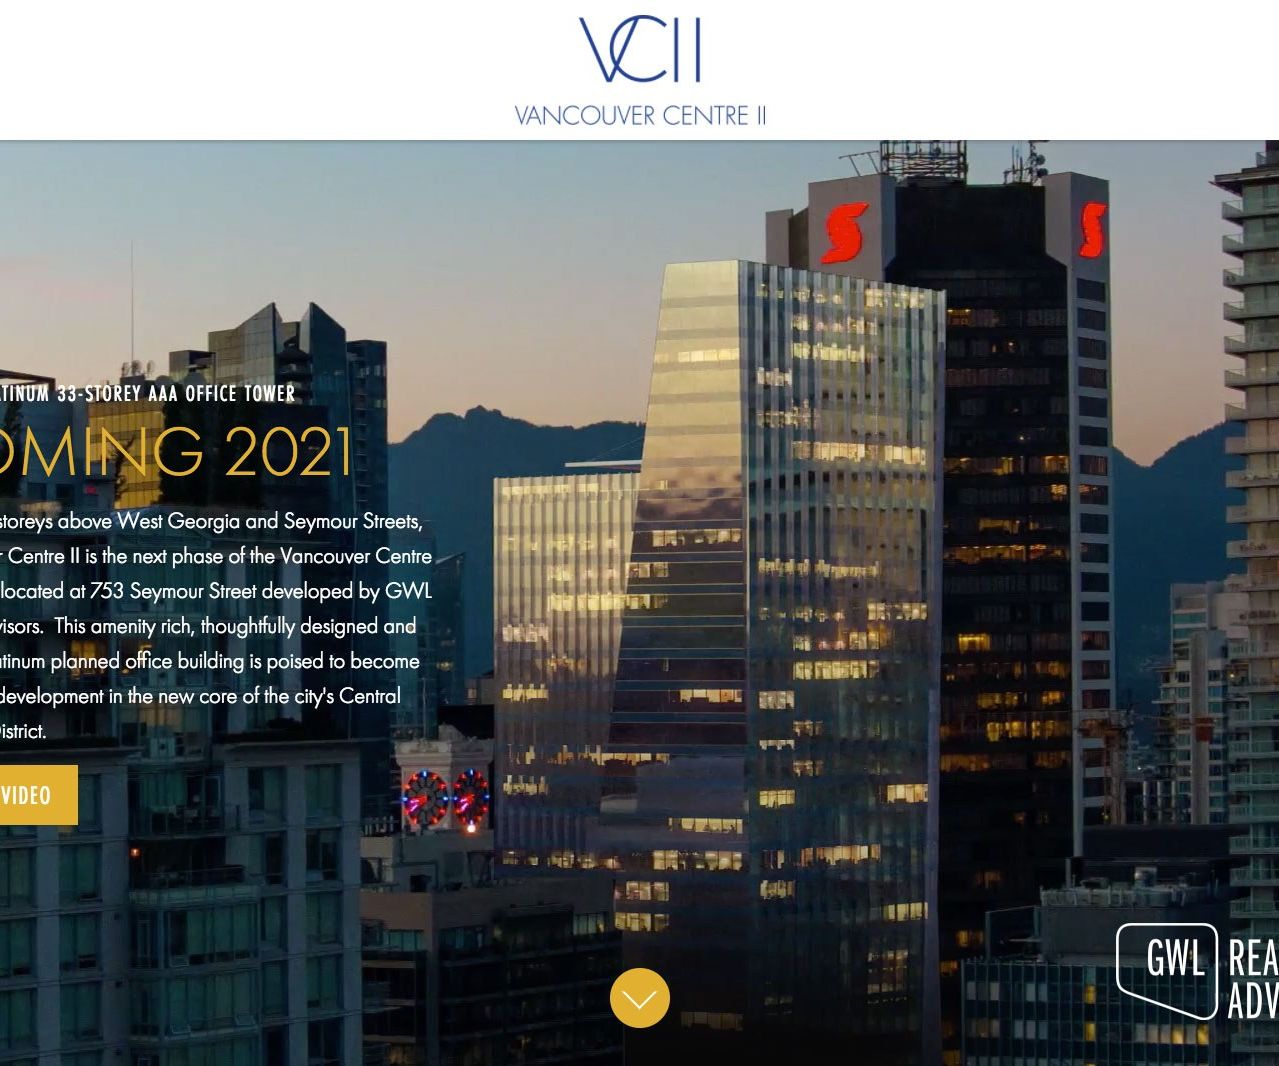 Vcii homepage